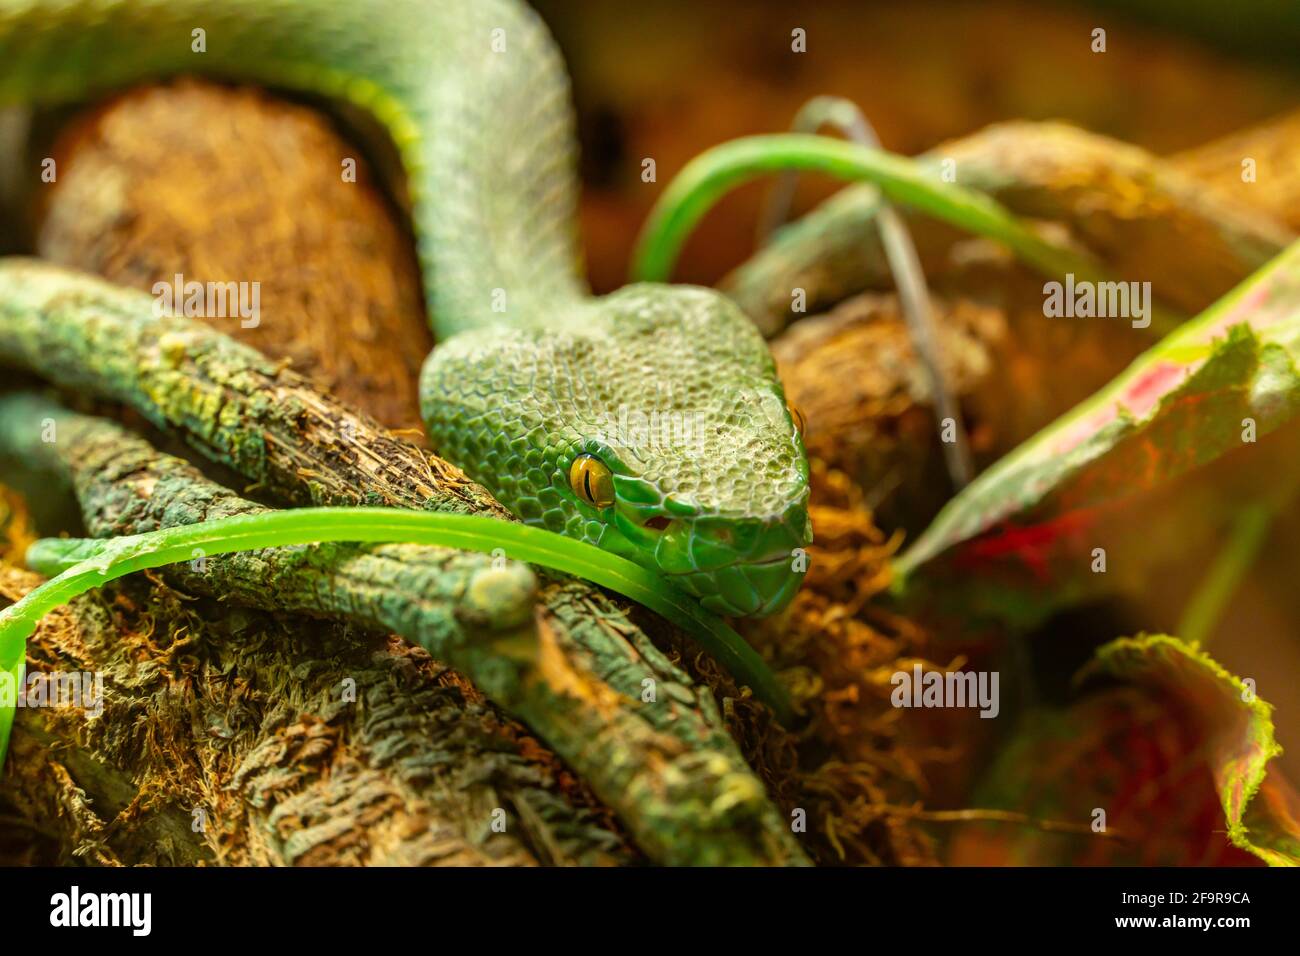 Asian palm pit viper close-up Trimeresurus and yellow eyes crawling towards the camera, green poisonous snake Stock Photo